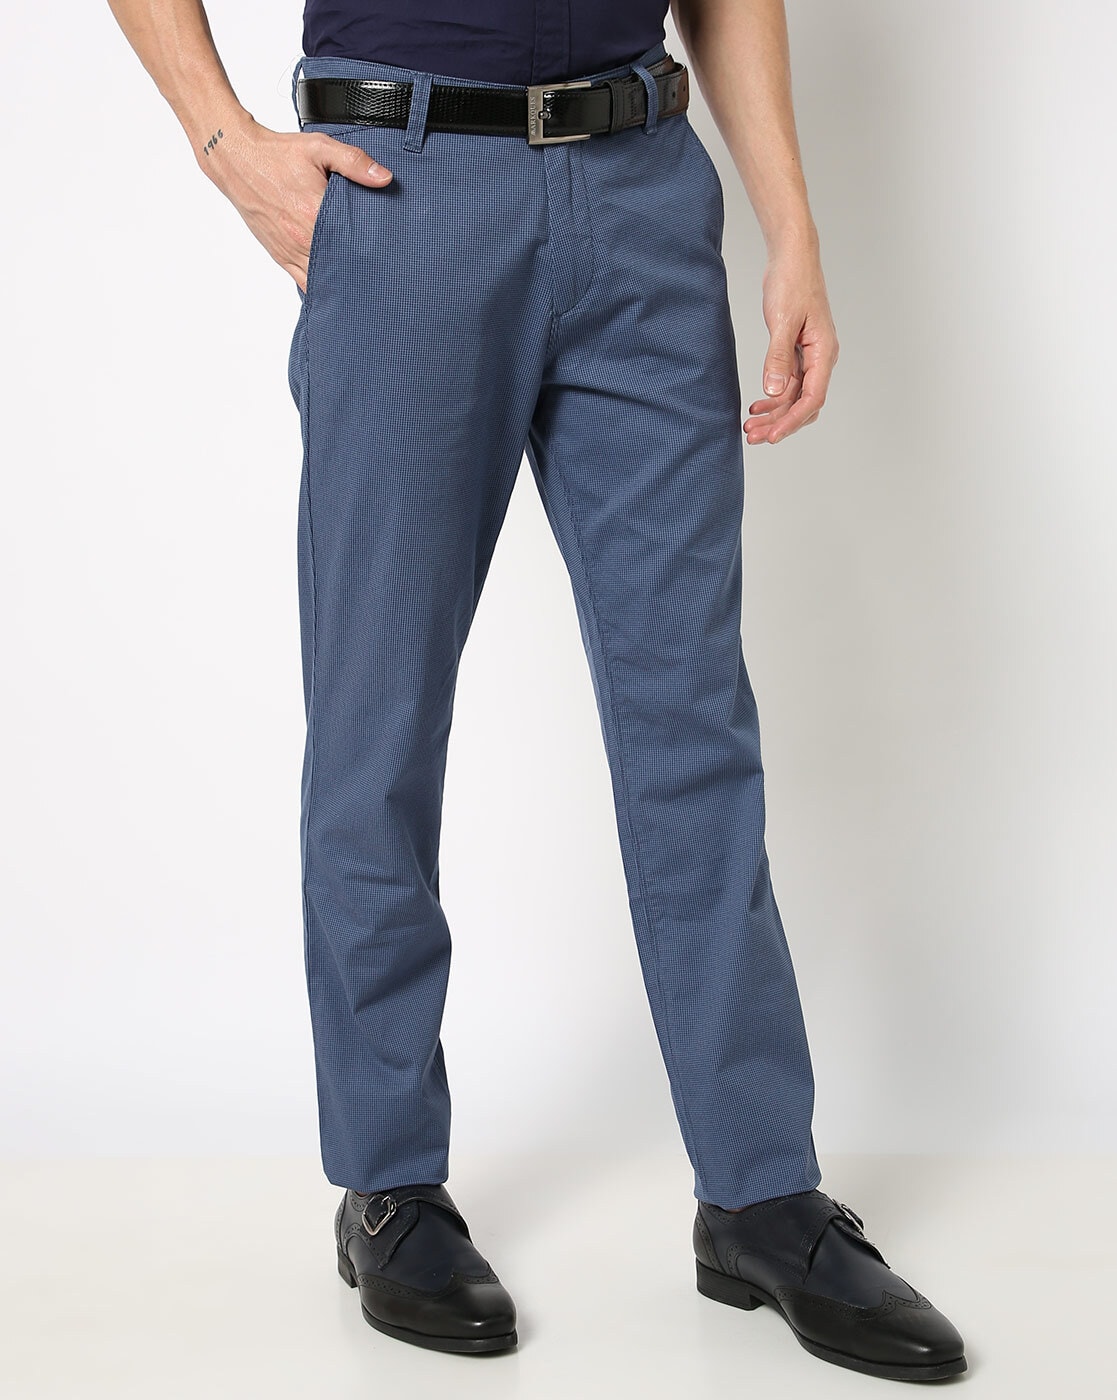 Buy Navy Blue Trousers  Pants for Men by JOHN PLAYERS Online  Ajiocom